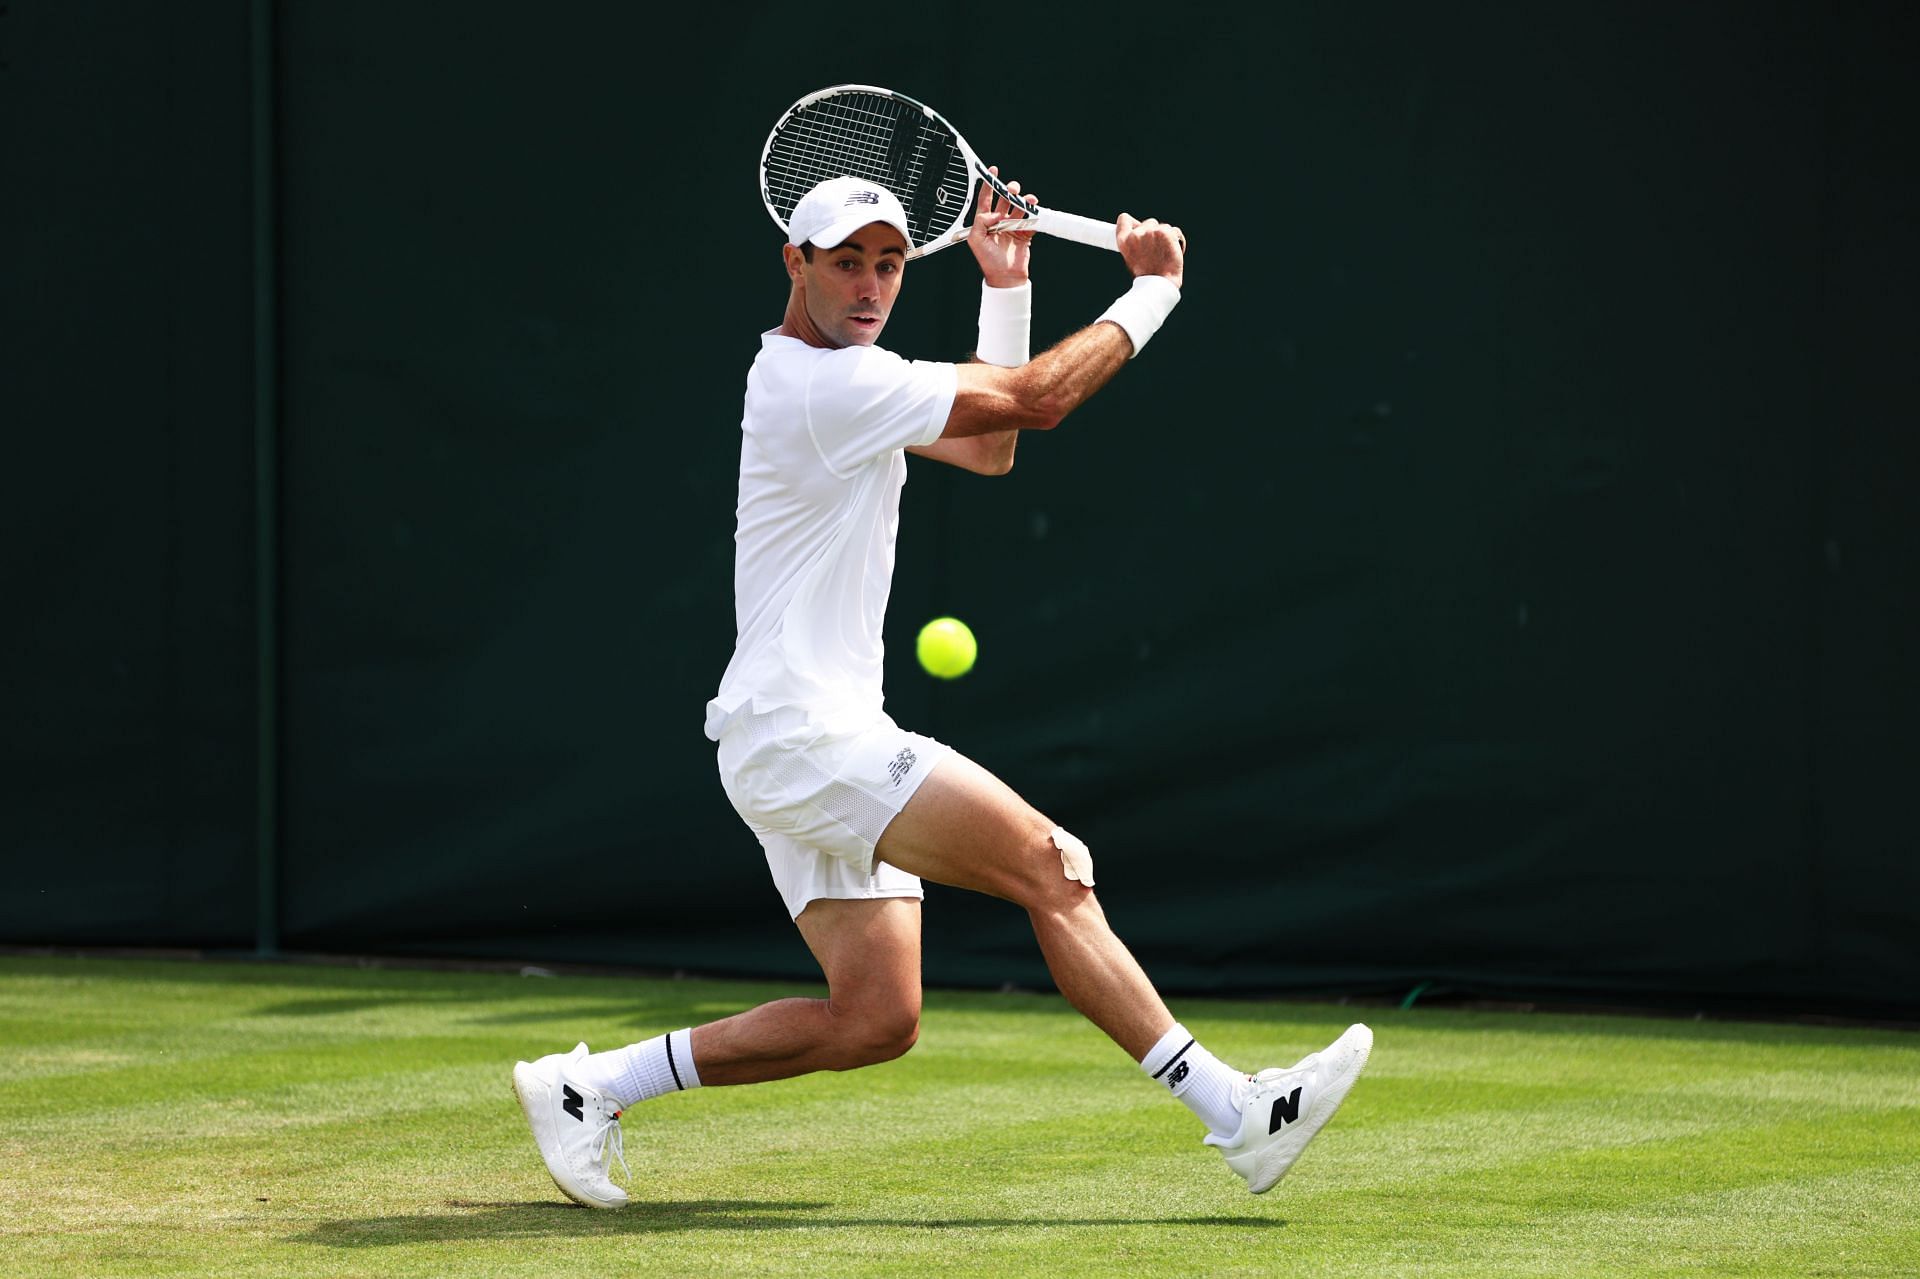 Novak Djokovics next match Opponent, venue, live streaming, TV channel, and schedule Wimbledon, 2R